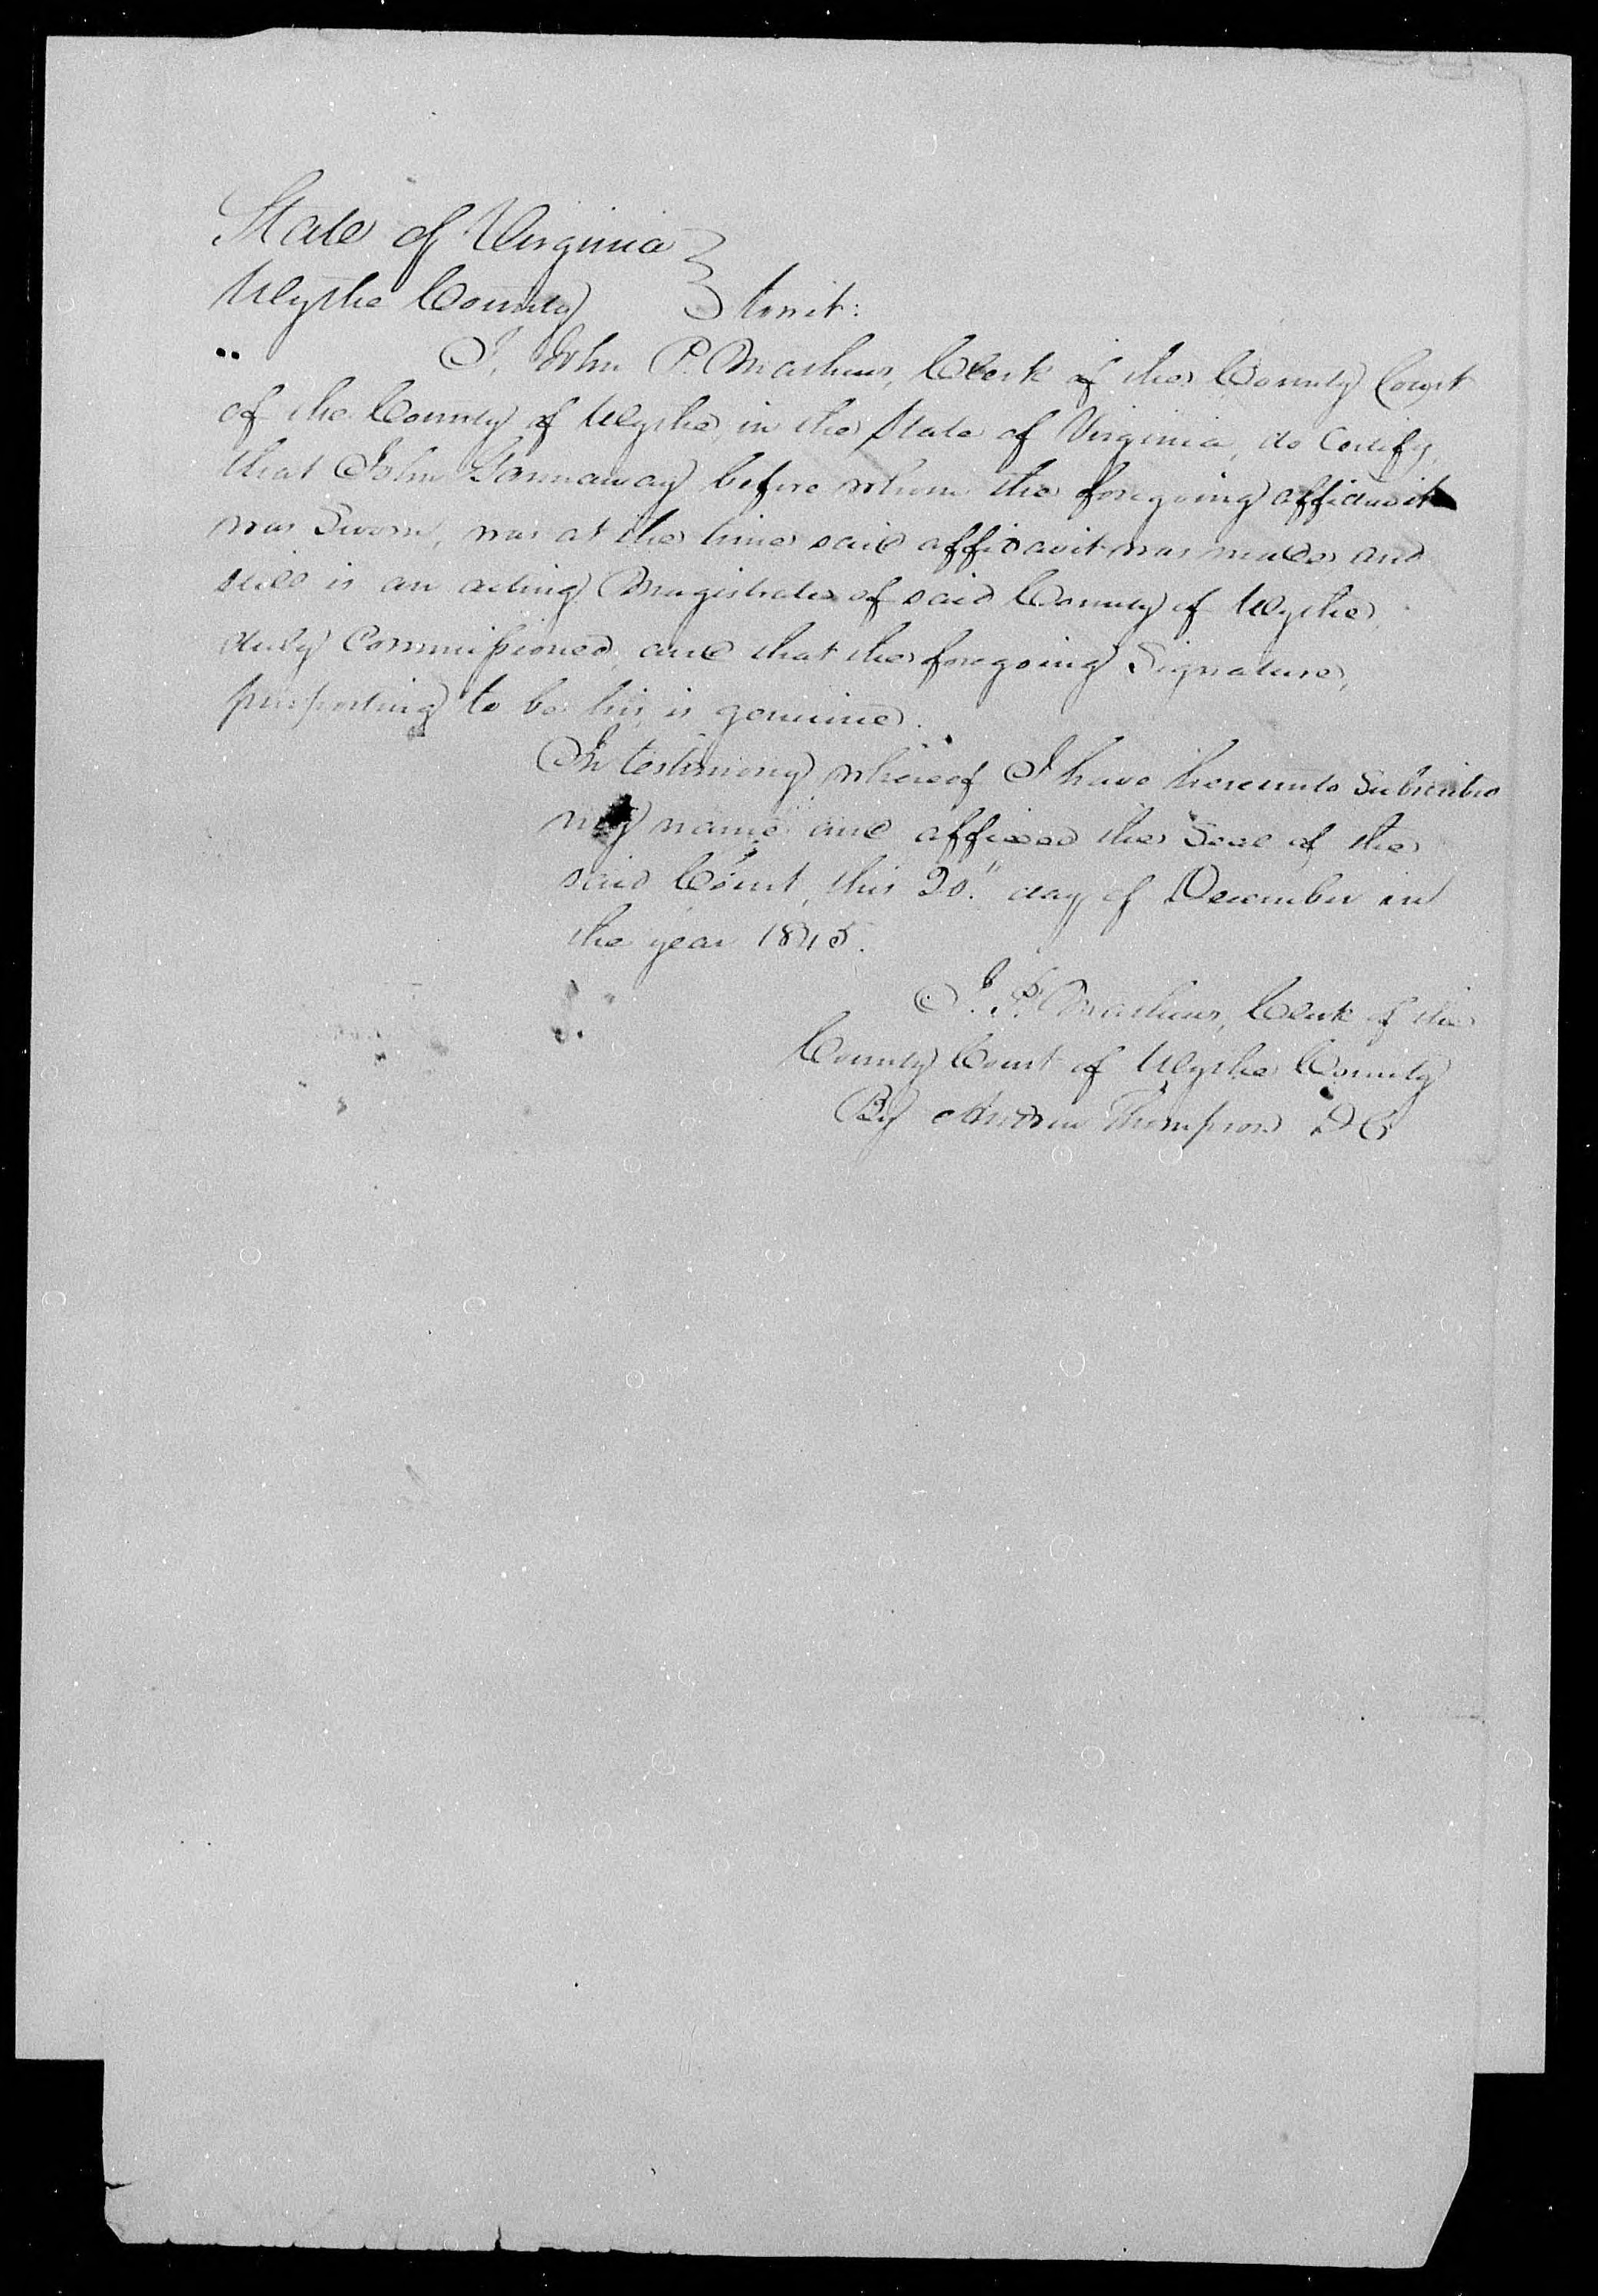 Affidavit of Christopher Philope in support of a Pension Claim for Peter and Margaret Kinder, 26 November 1845, page 2